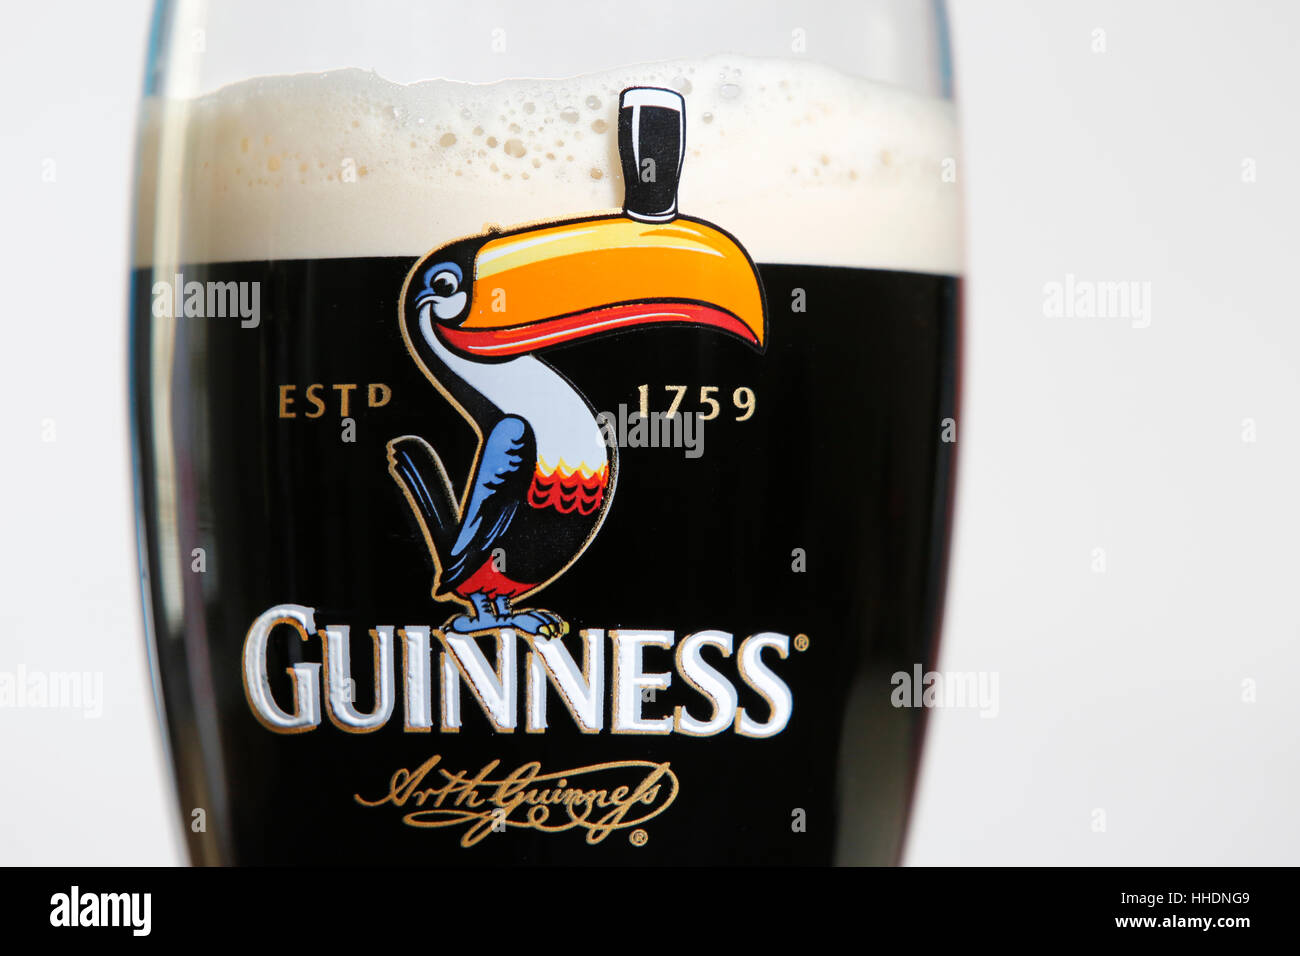 Guinness Toucan Pint Glass